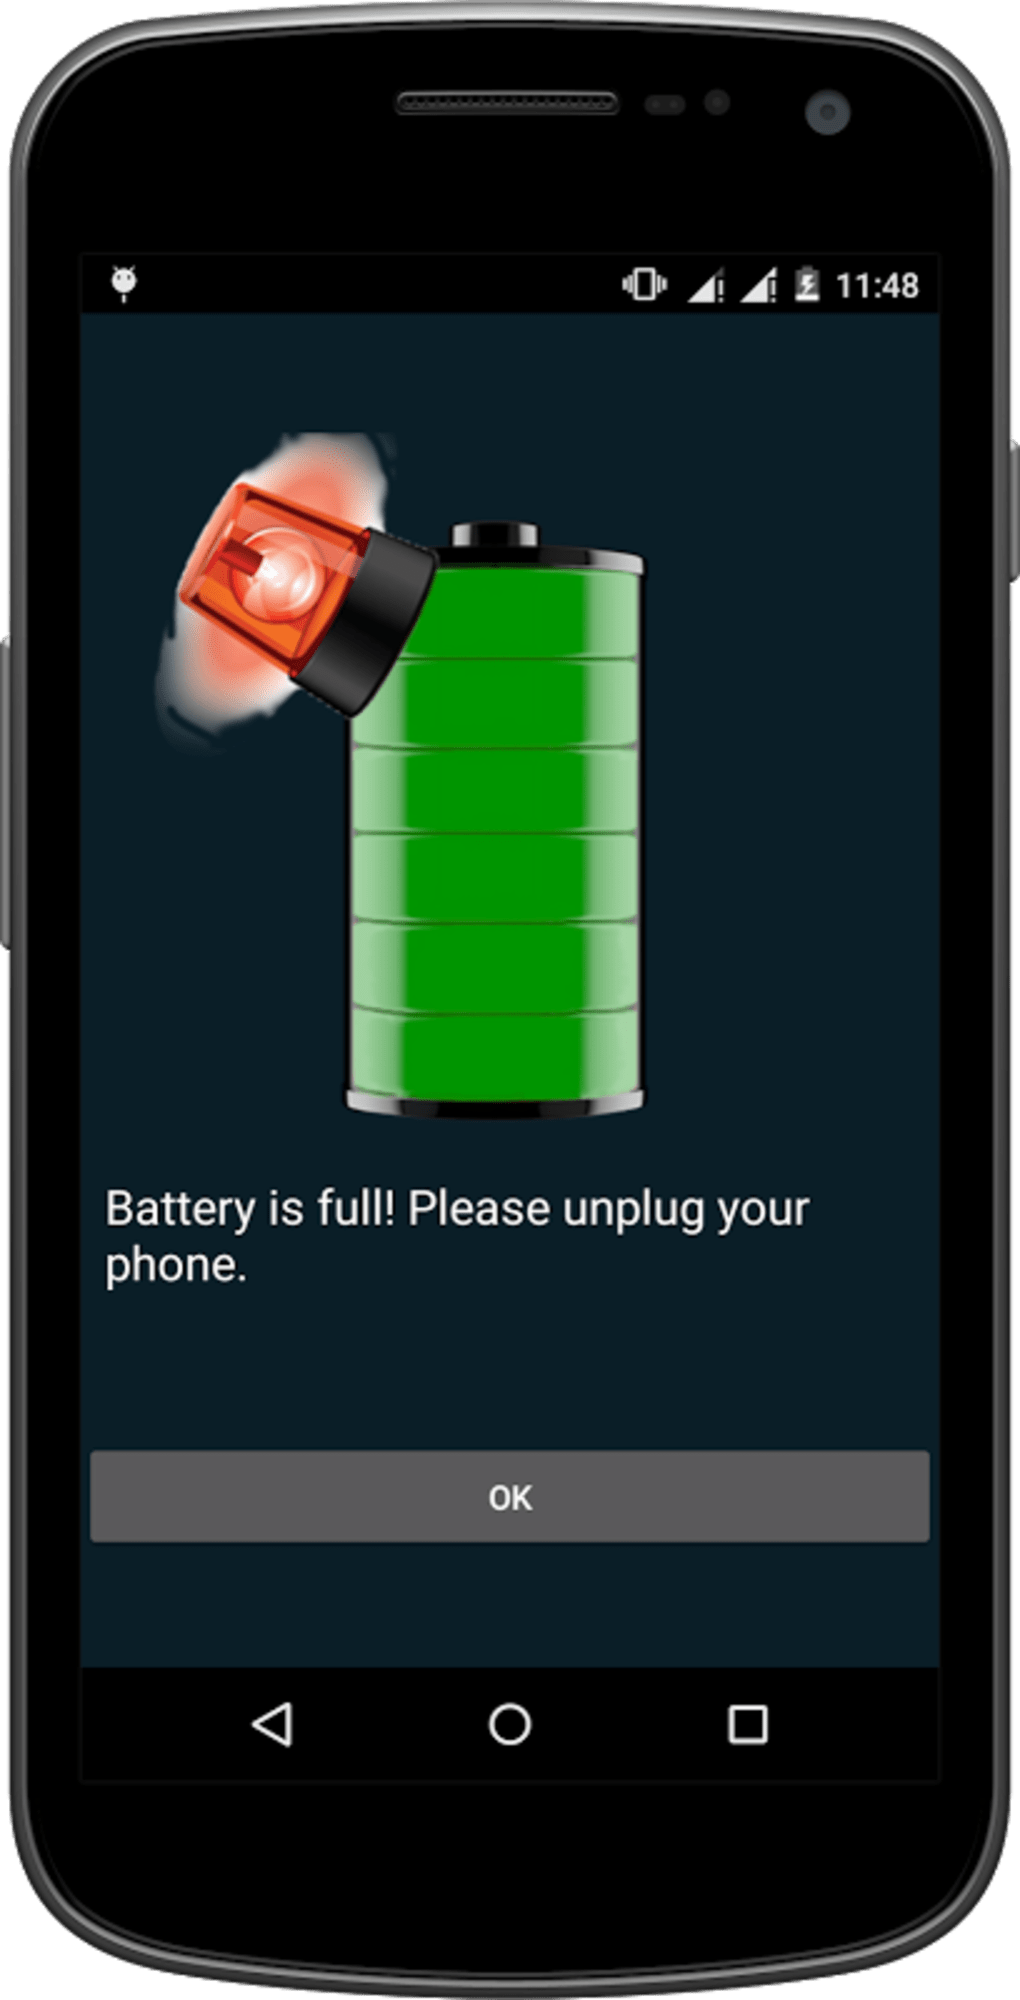 Battery full. Full Battery. 100 Battery Full. Full Battery Phone. Battery is Full.